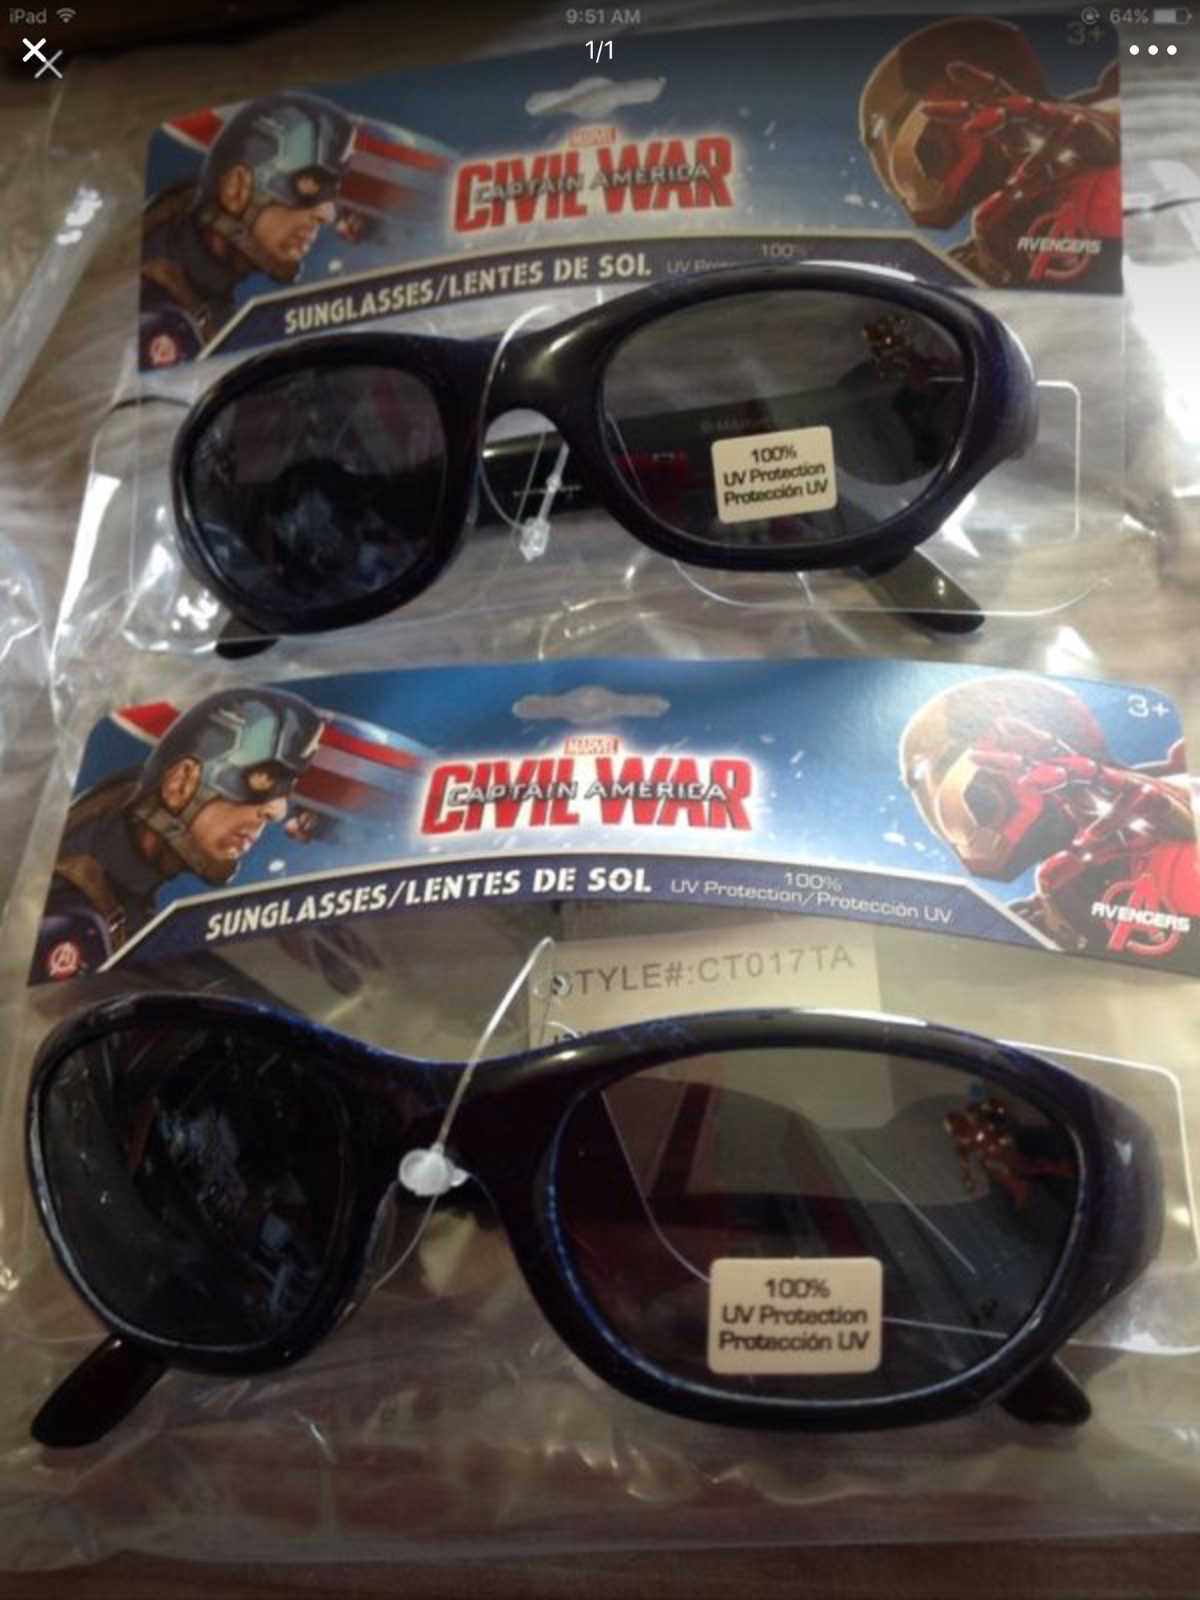 2 Captain America Civil War Boys Sunglasses100% Uv Protection Children's 3+